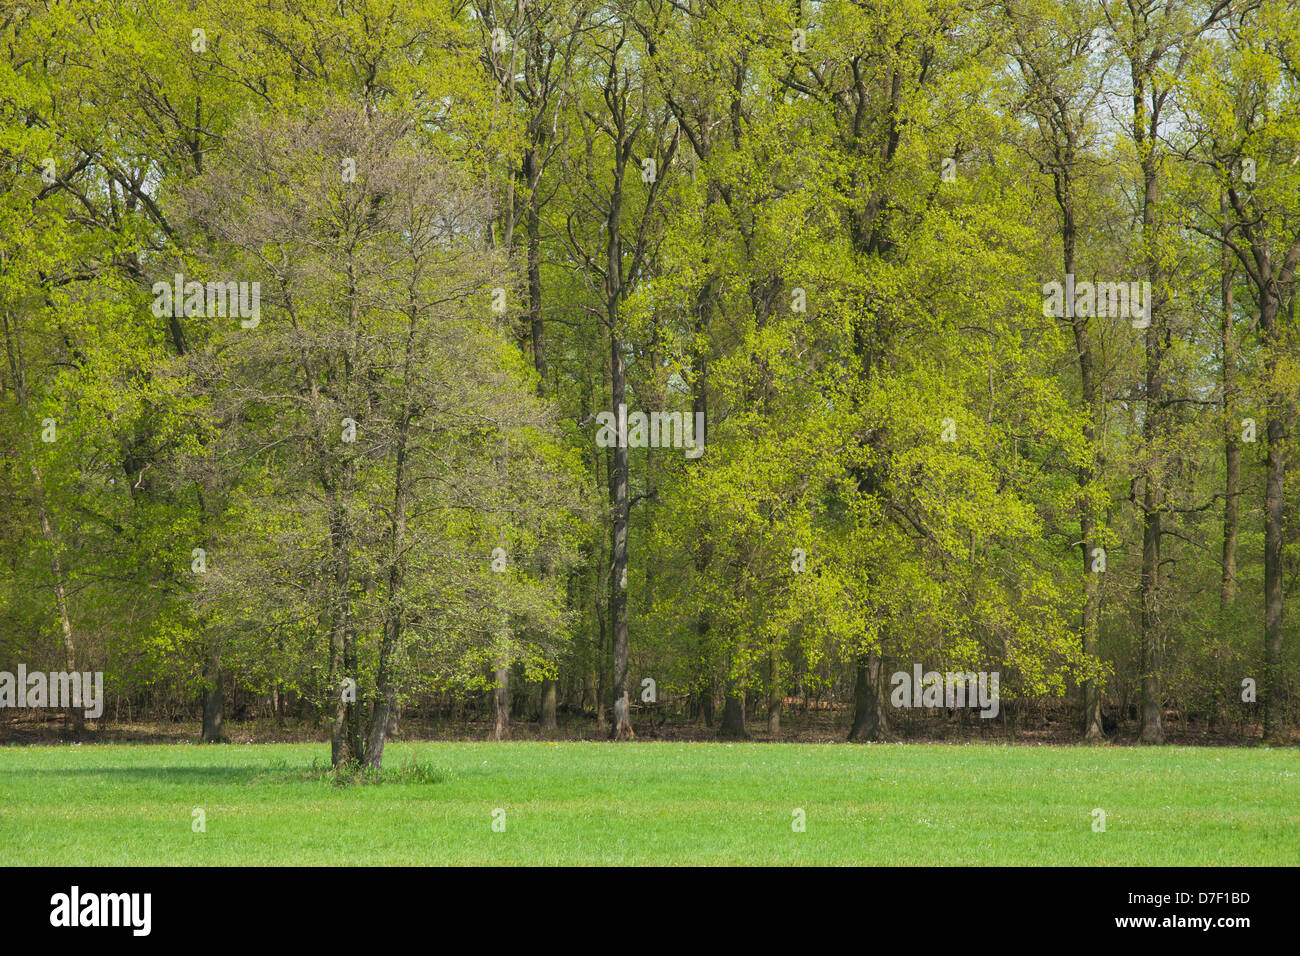 Frühlingslandschaft, Bäume mit neuen grünen Blättern auf Wiese Stockfoto